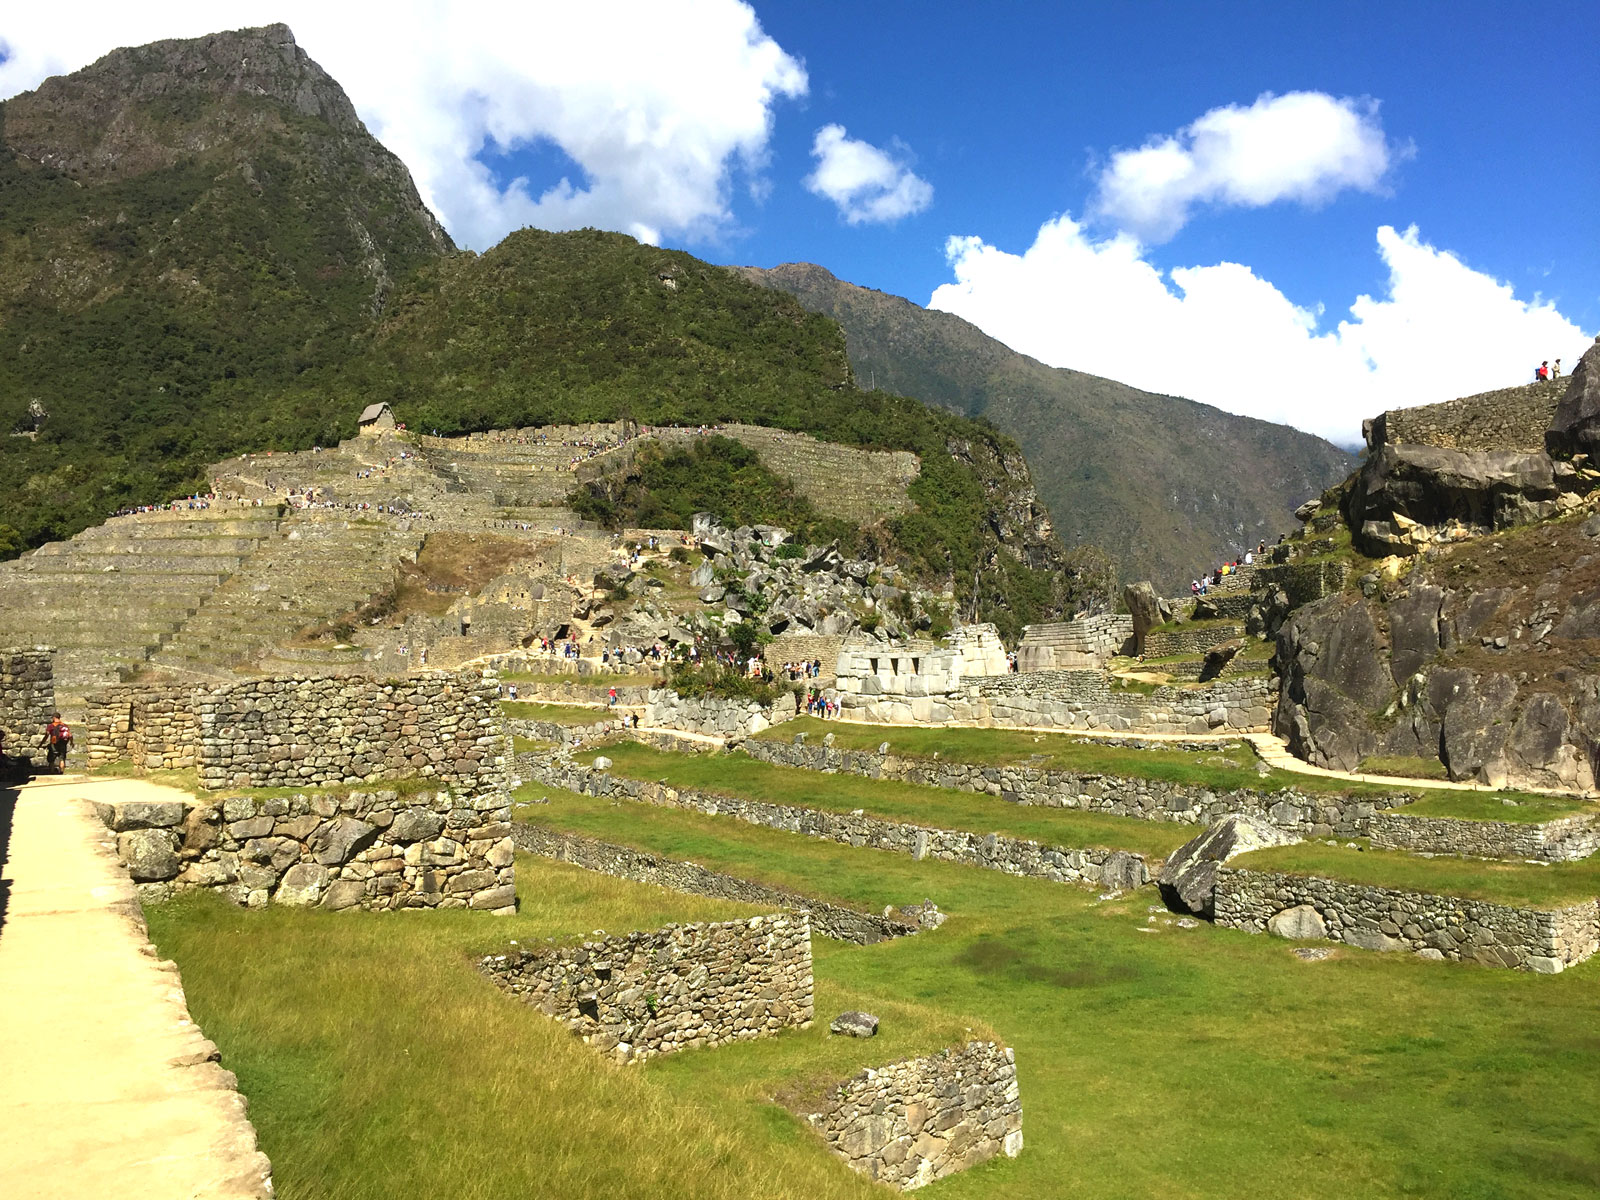 The Ruins at Machu Picchu